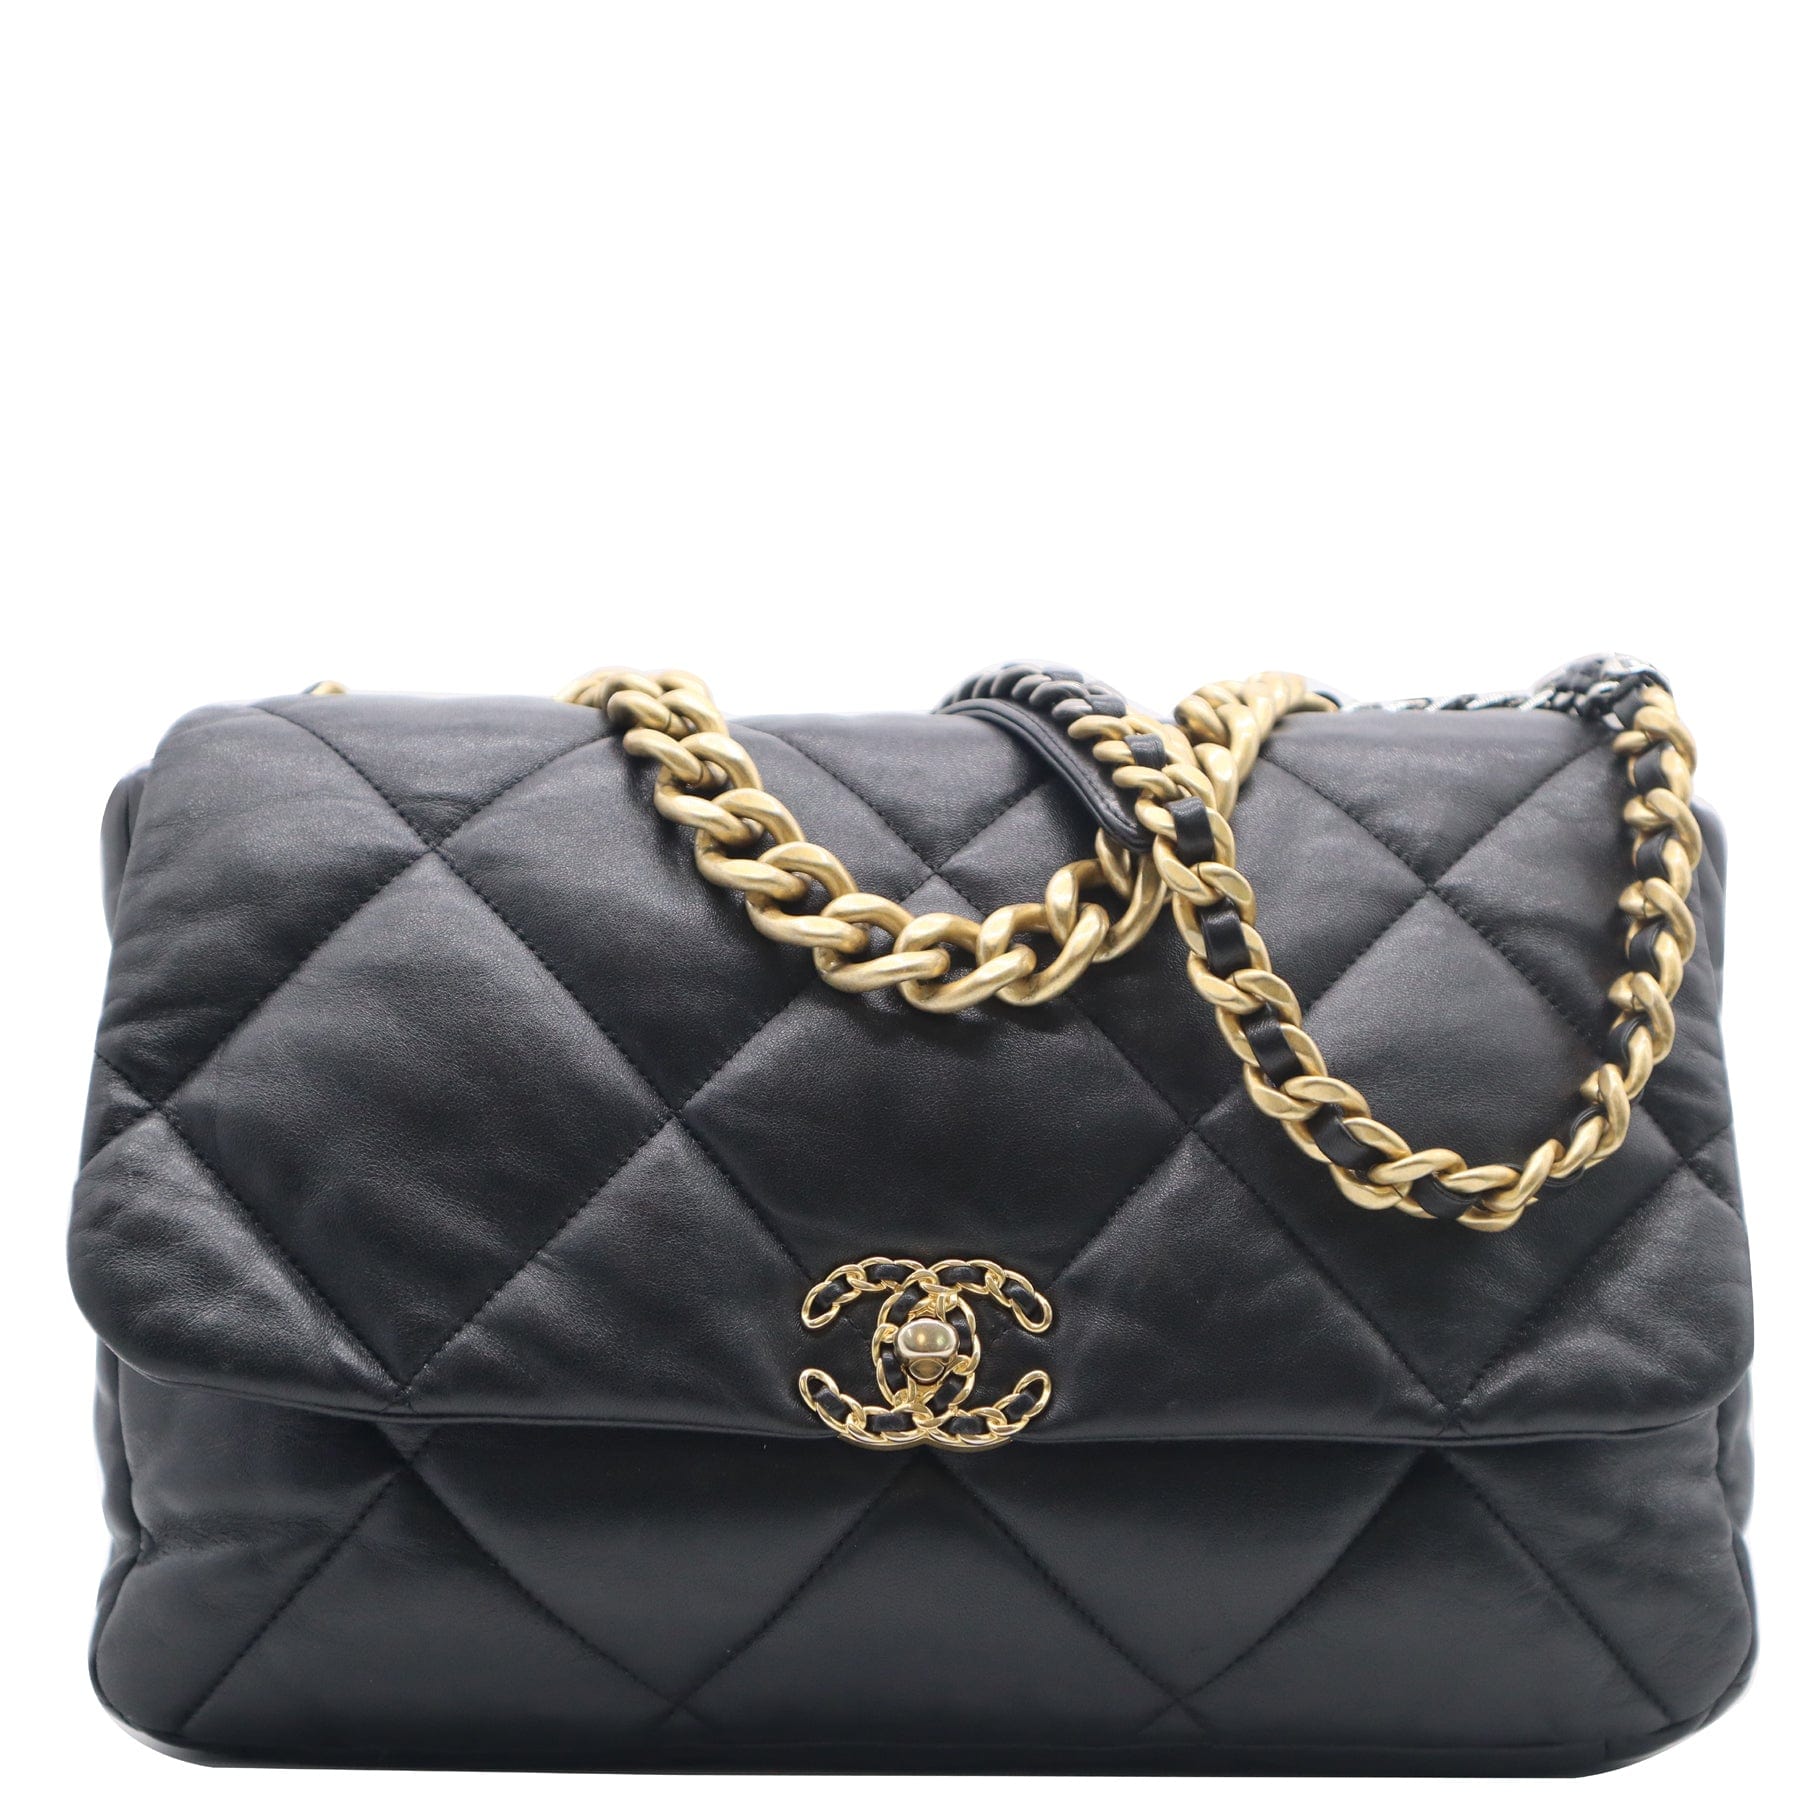 Chanel New Caviar Top Chain Jumbo Cc Flap Strap Handle Black Shoulder Bag 19